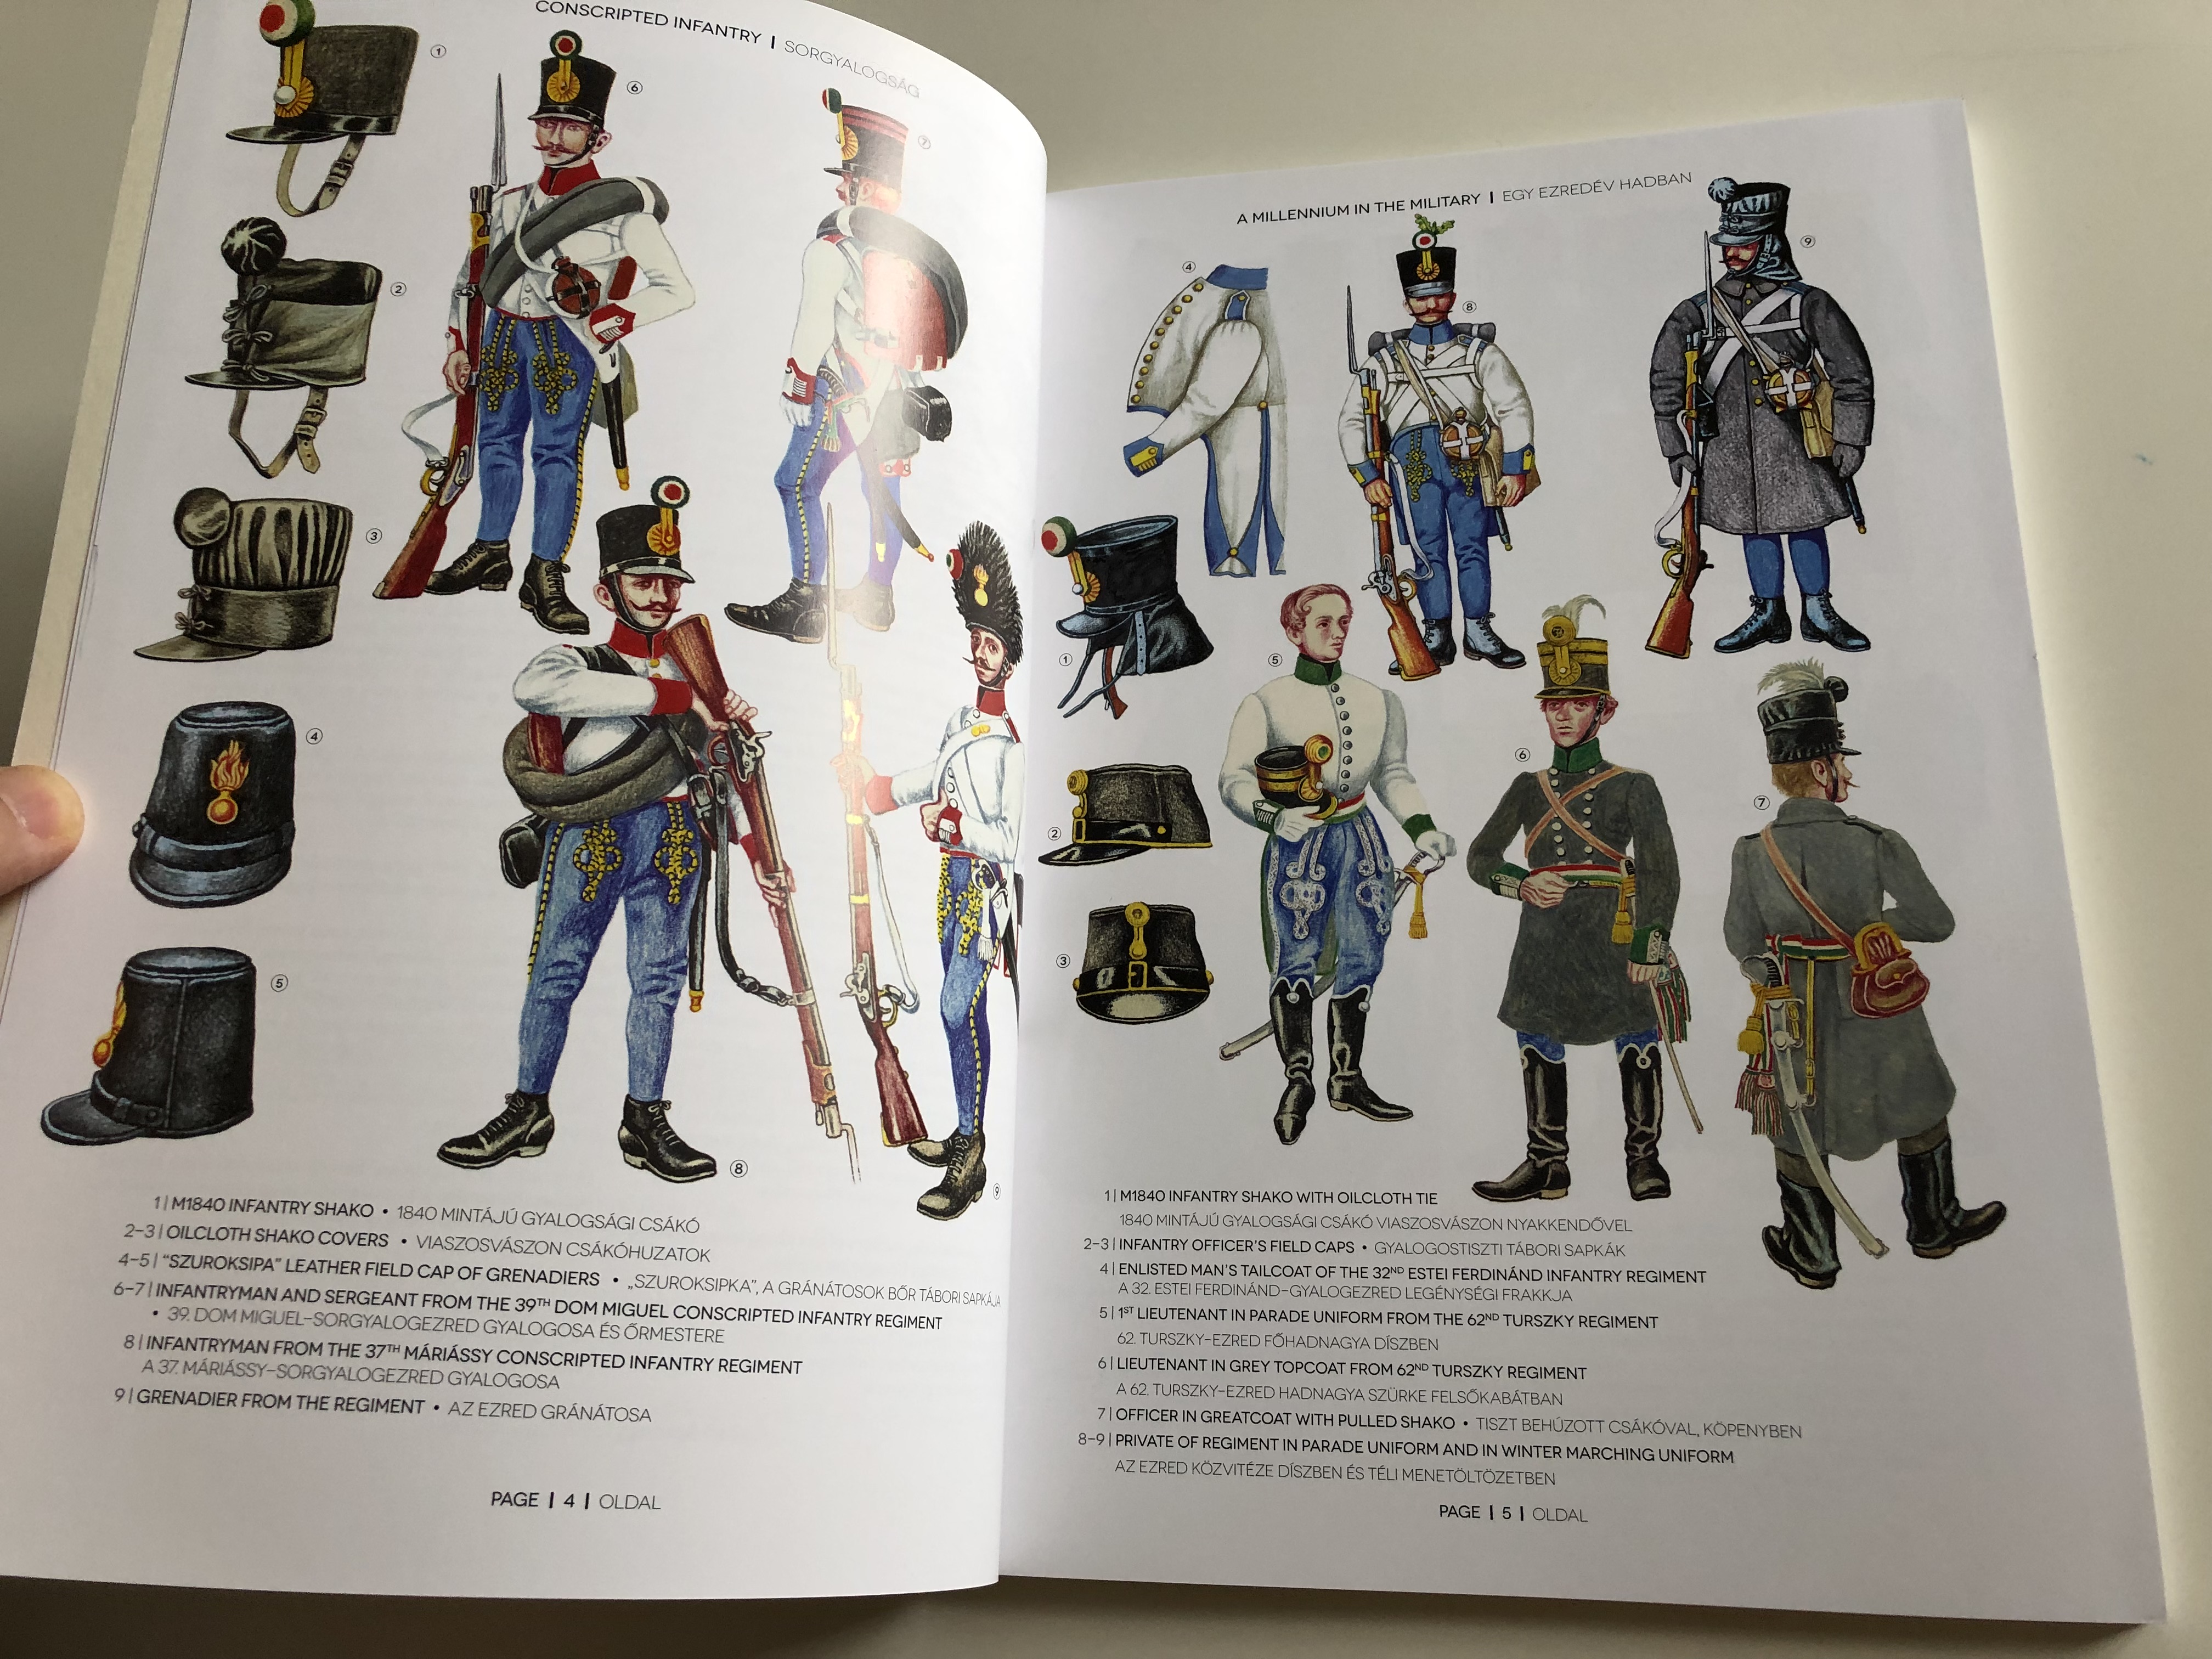 the-honv-d-army-1848-1849-by-gy-z-somogyi-a-honv-dsereg-1848-1849-a-millennium-in-the-military-egy-ezred-v-hadban-paperback-2016-hm-zr-nyi-3-.jpg